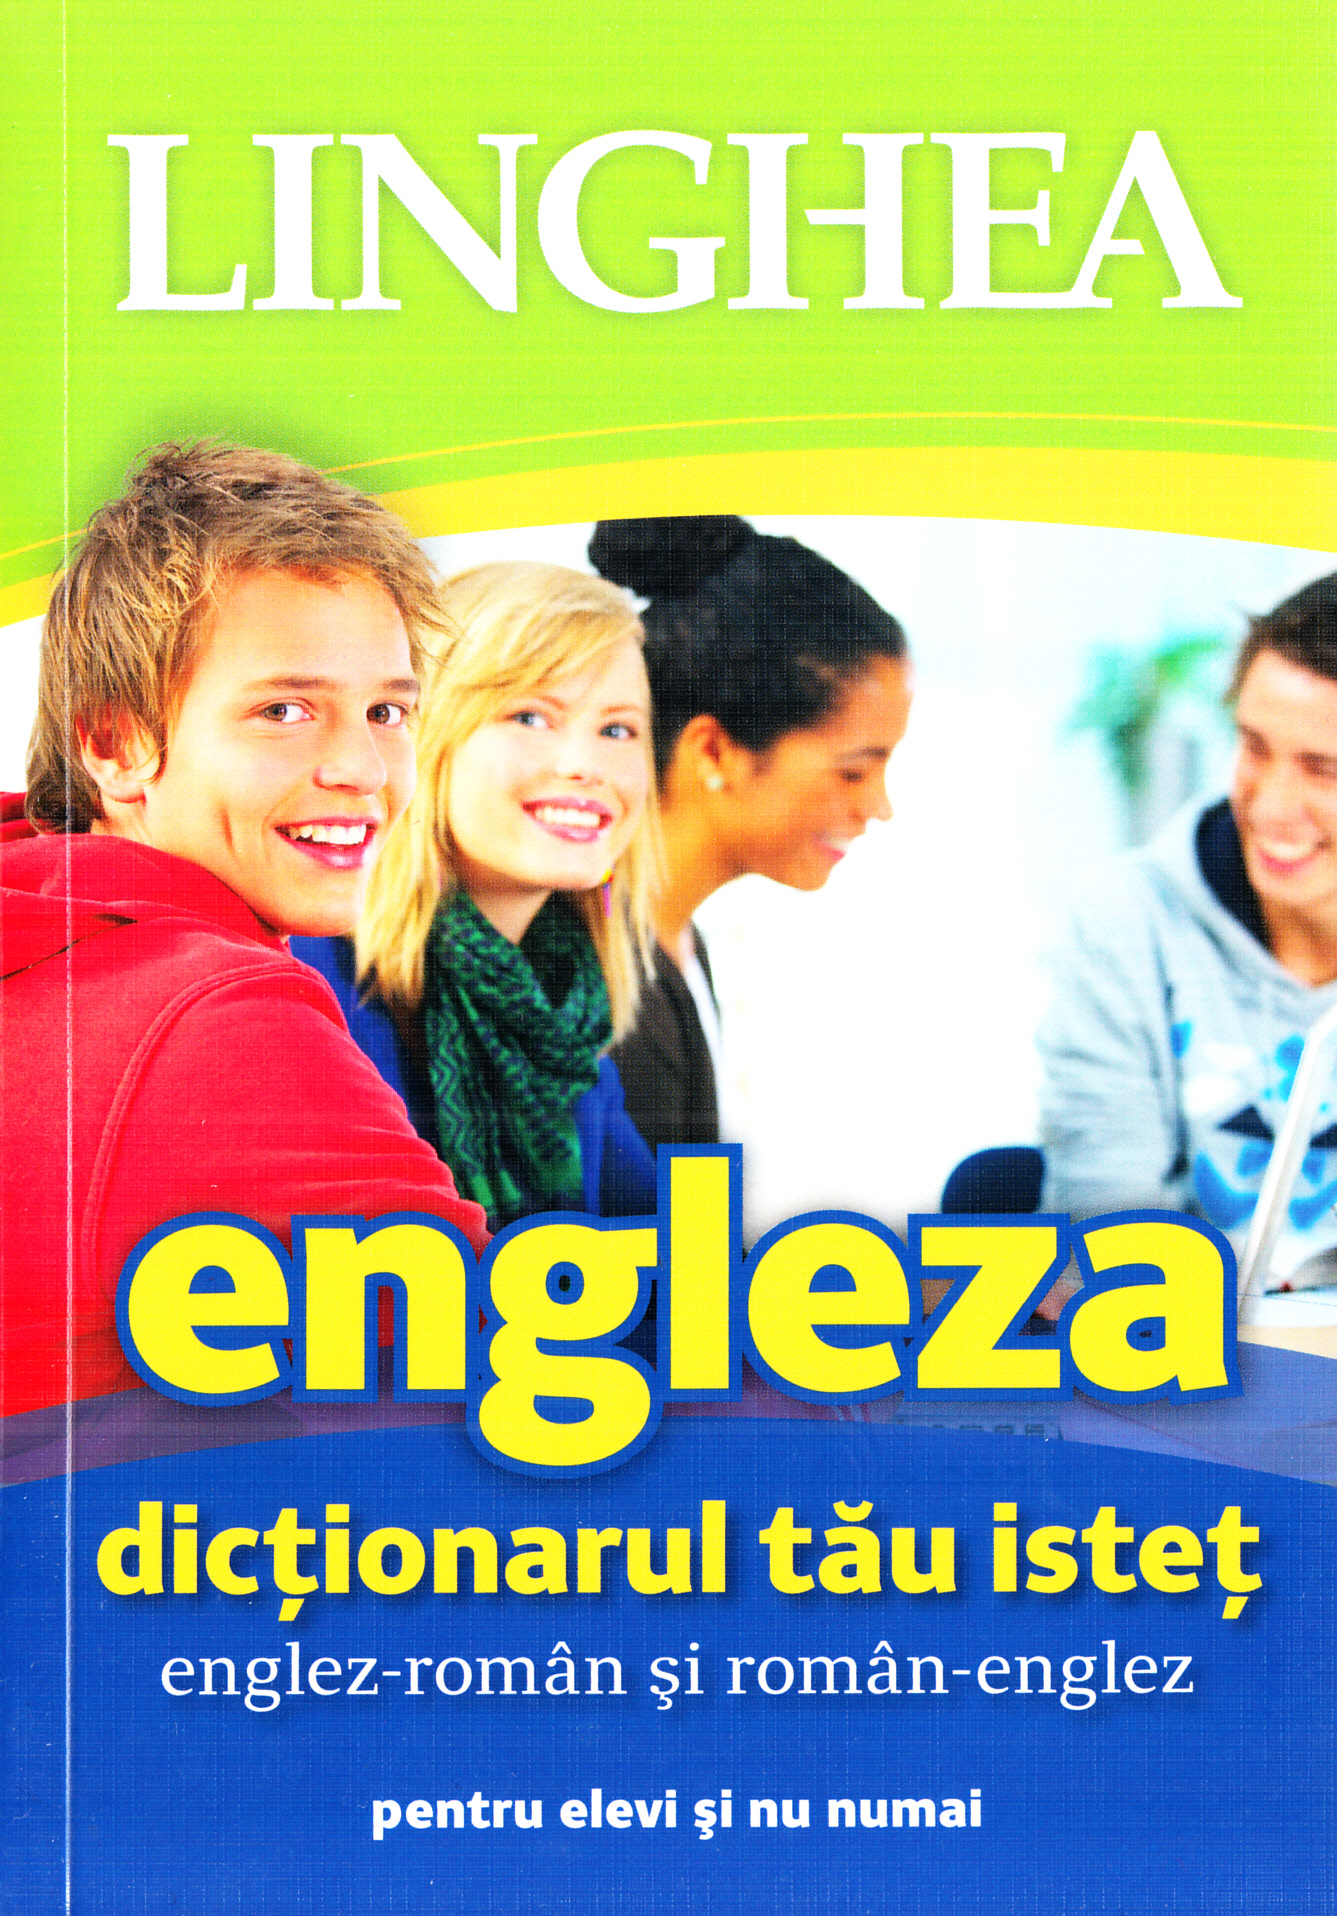 Dictionarul tau istet englez-roman, roman-englez